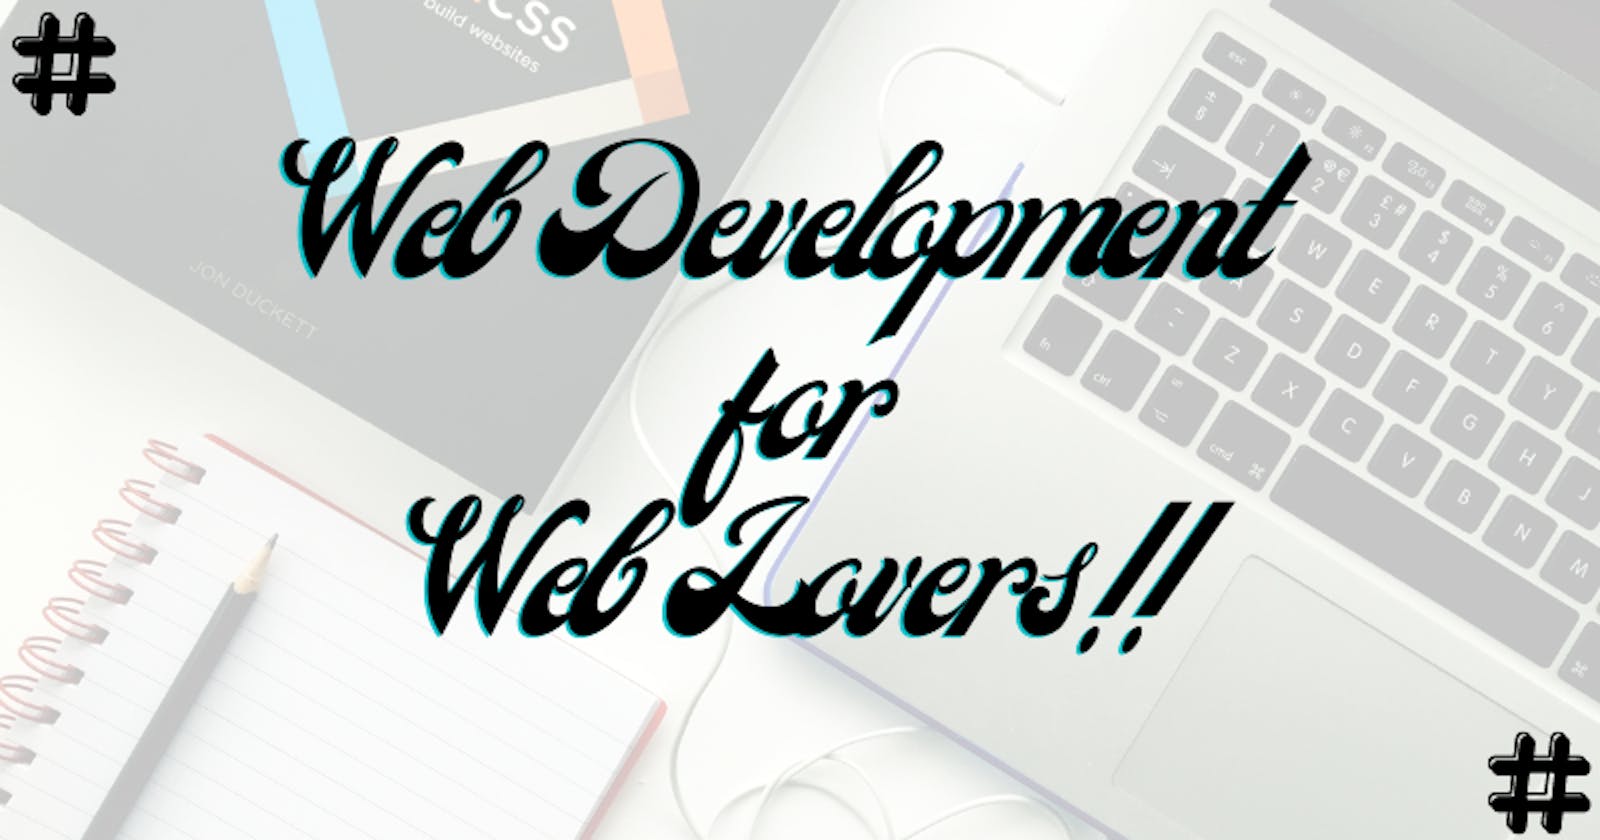 Web Development for Web Lovers!